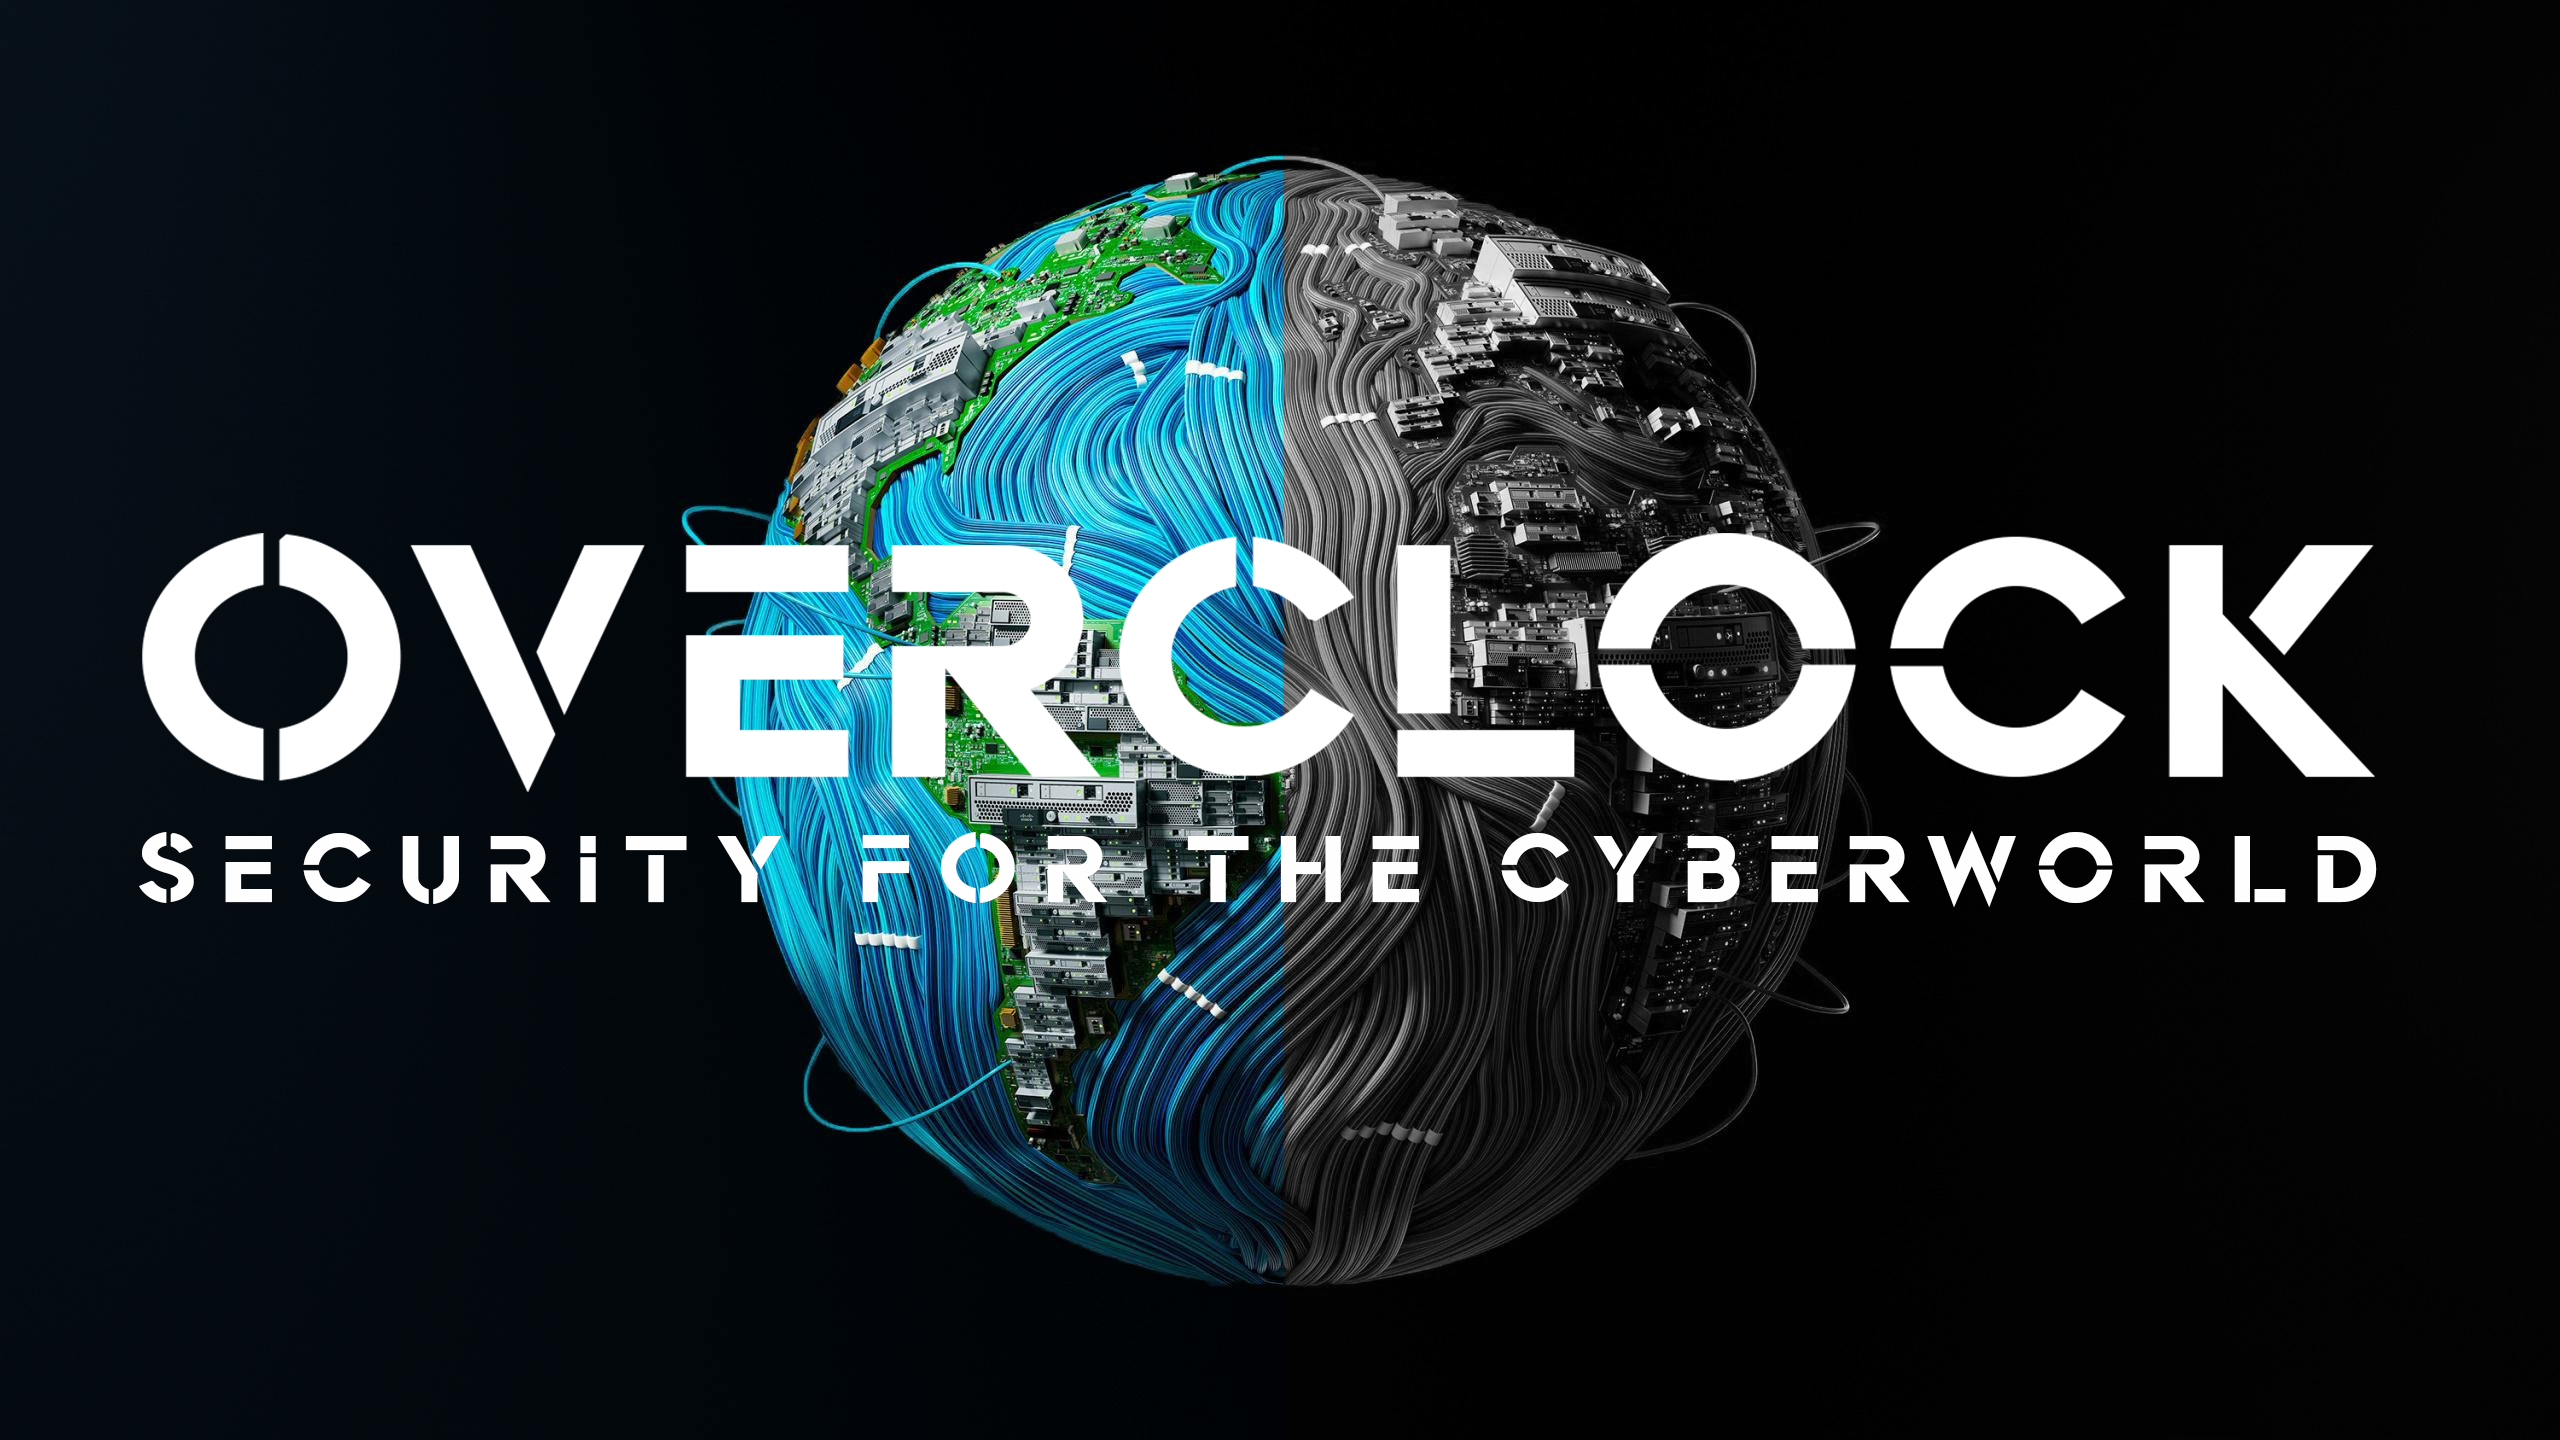 Overclock cybersecurity laboratory